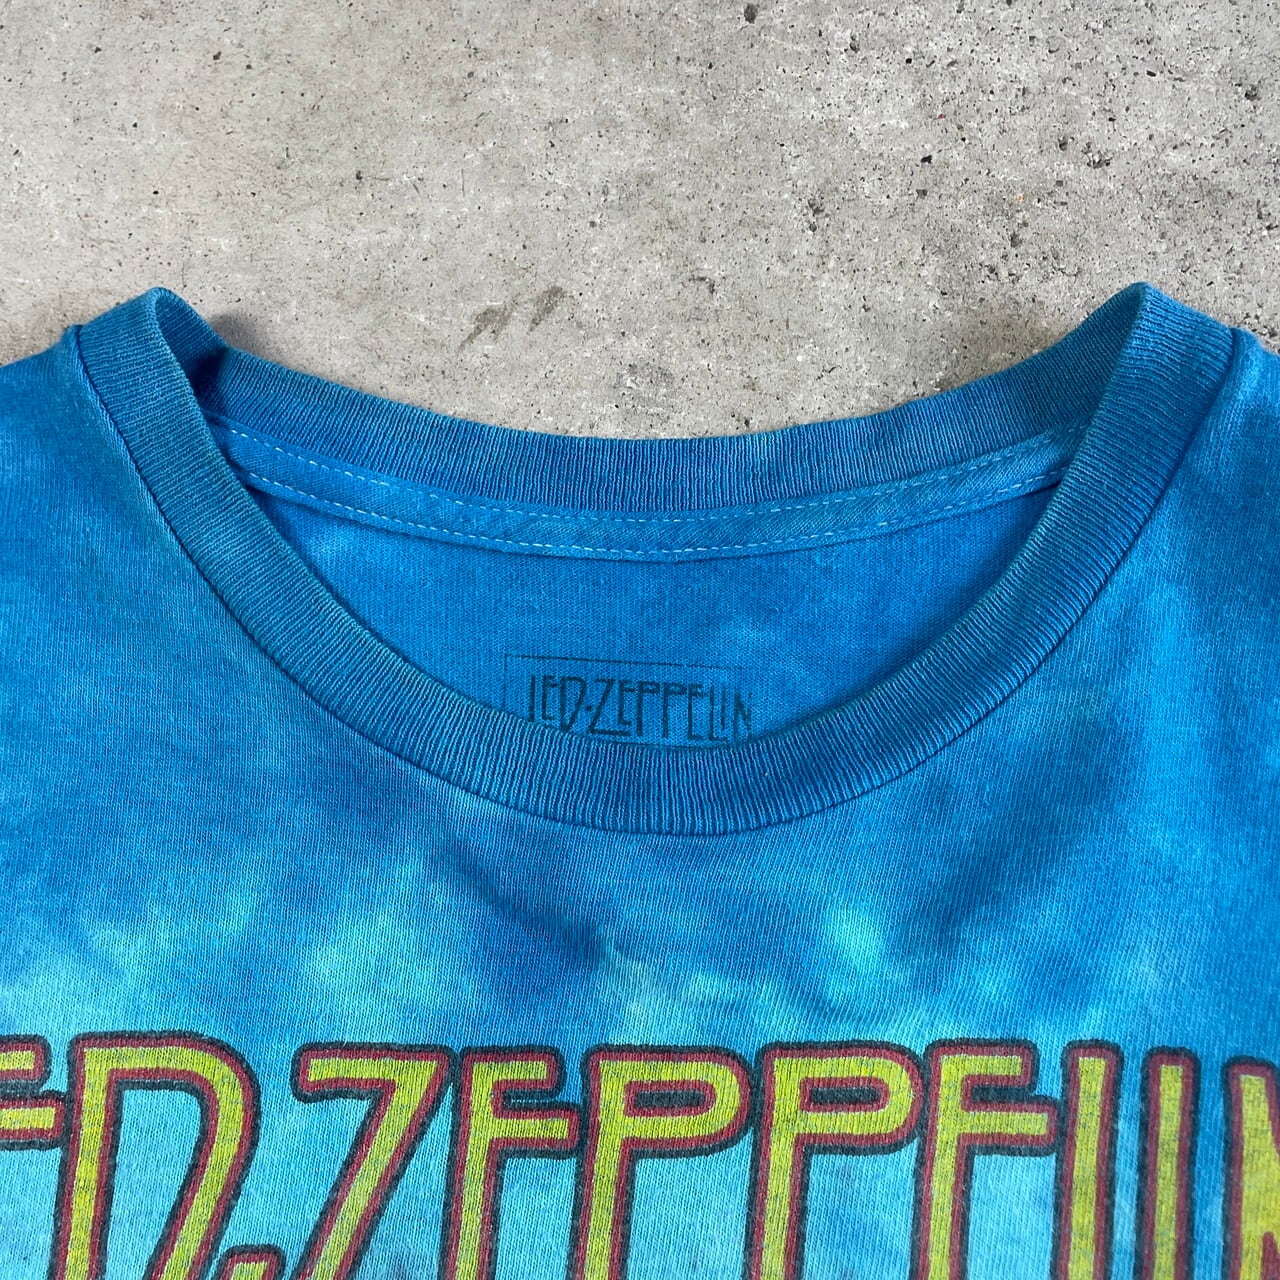 Led ZeppelinレッドツェッペリンバンドTシャツバンTタイダイ染めブルー